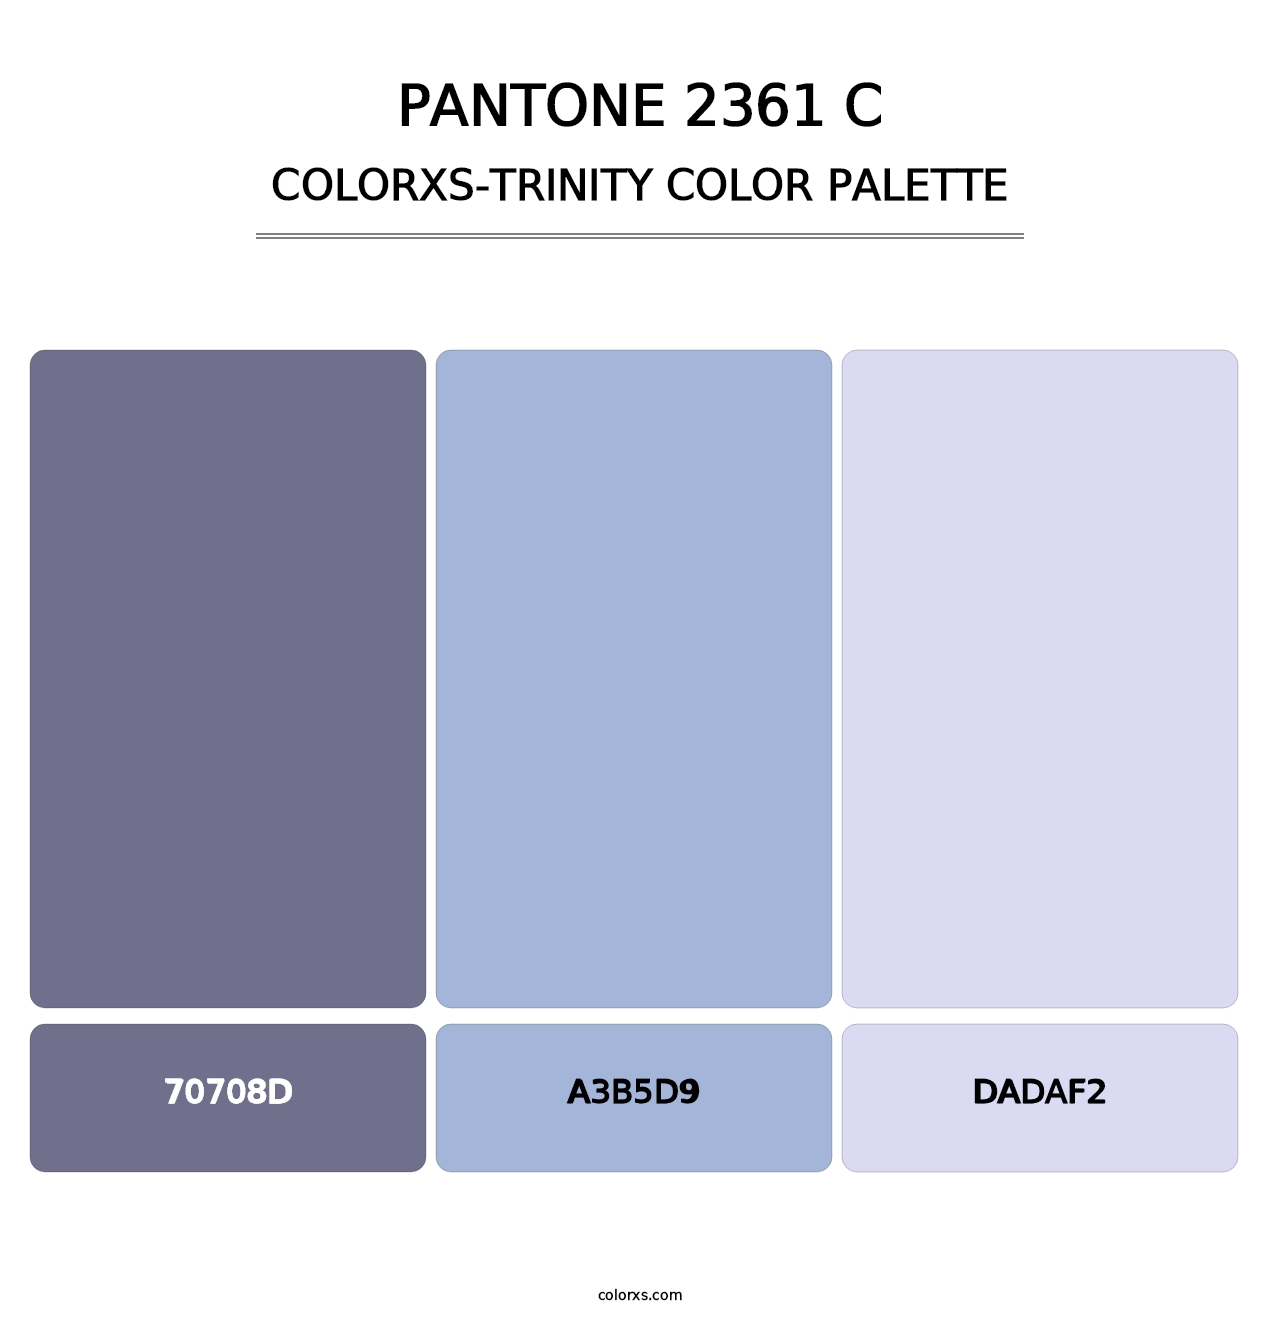 PANTONE 2361 C - Colorxs Trinity Palette